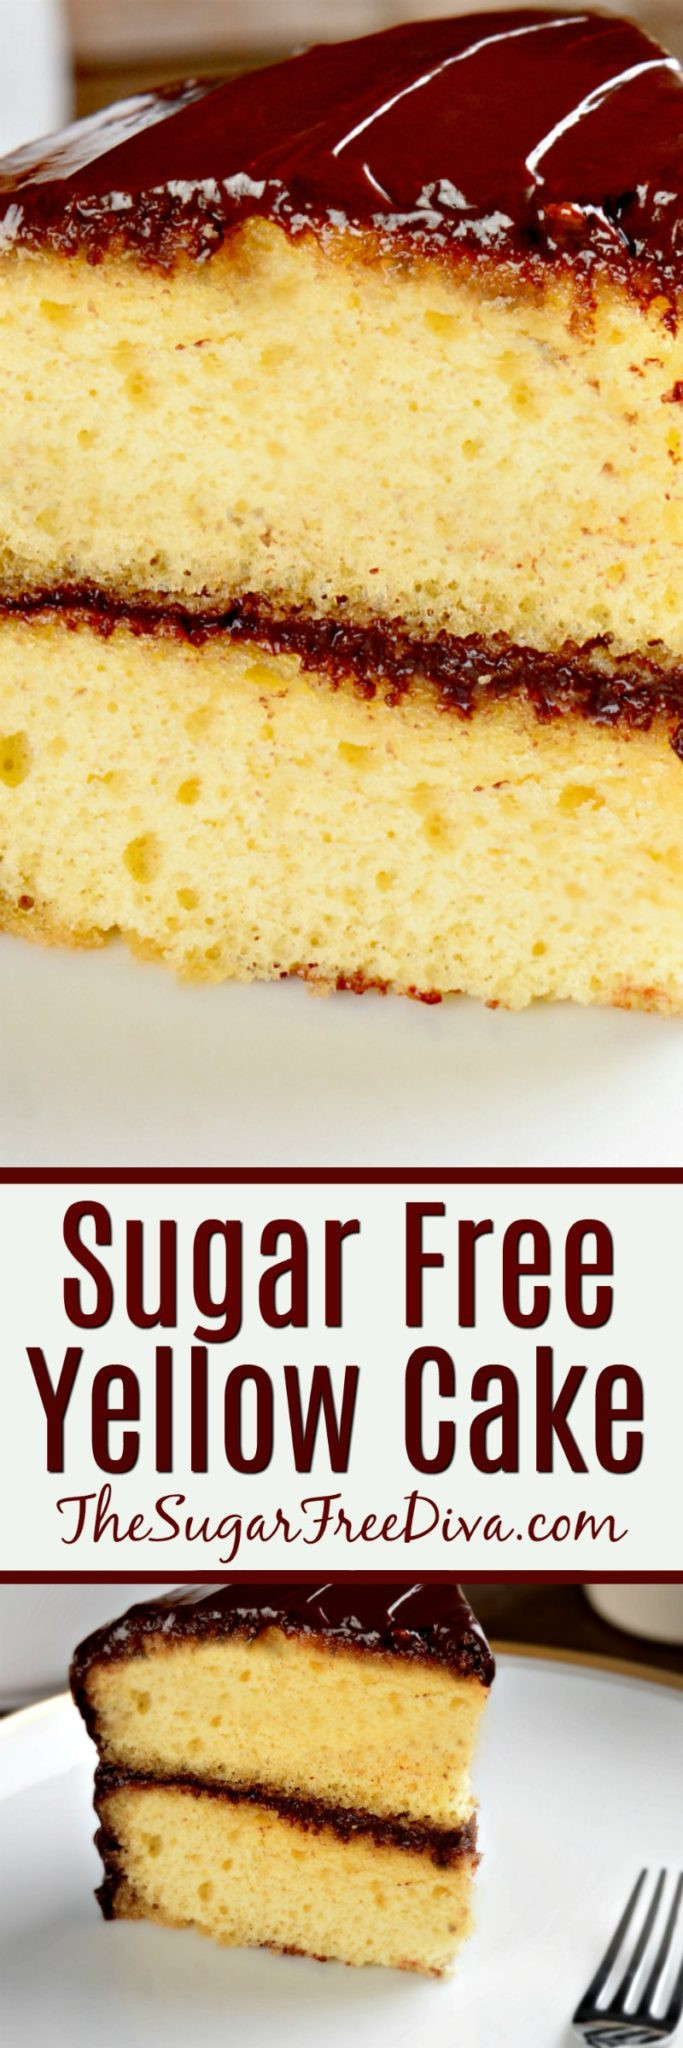 Sugar Free Birthday Cake Recipes
 A Basic and Easy Sugar Free Yellow Cake Recipe